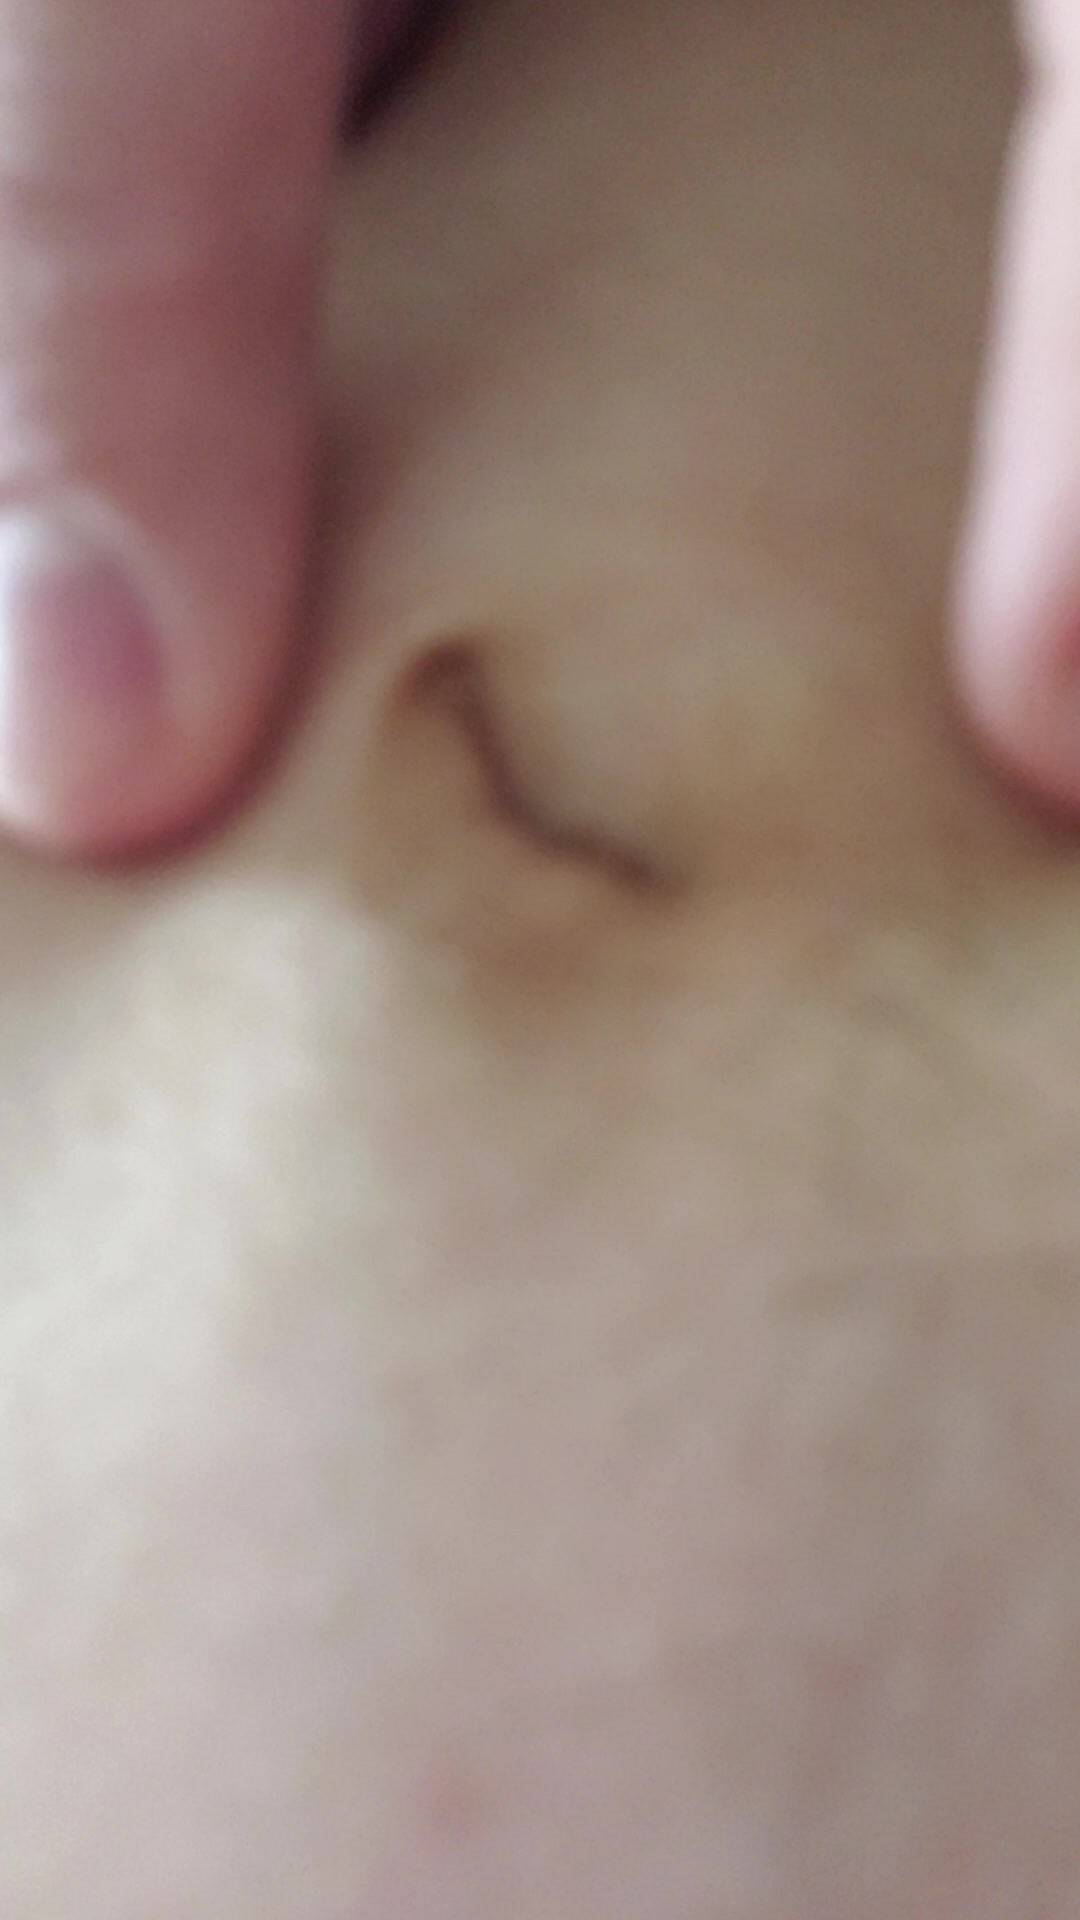 Male Bellybutton Finger Fuck